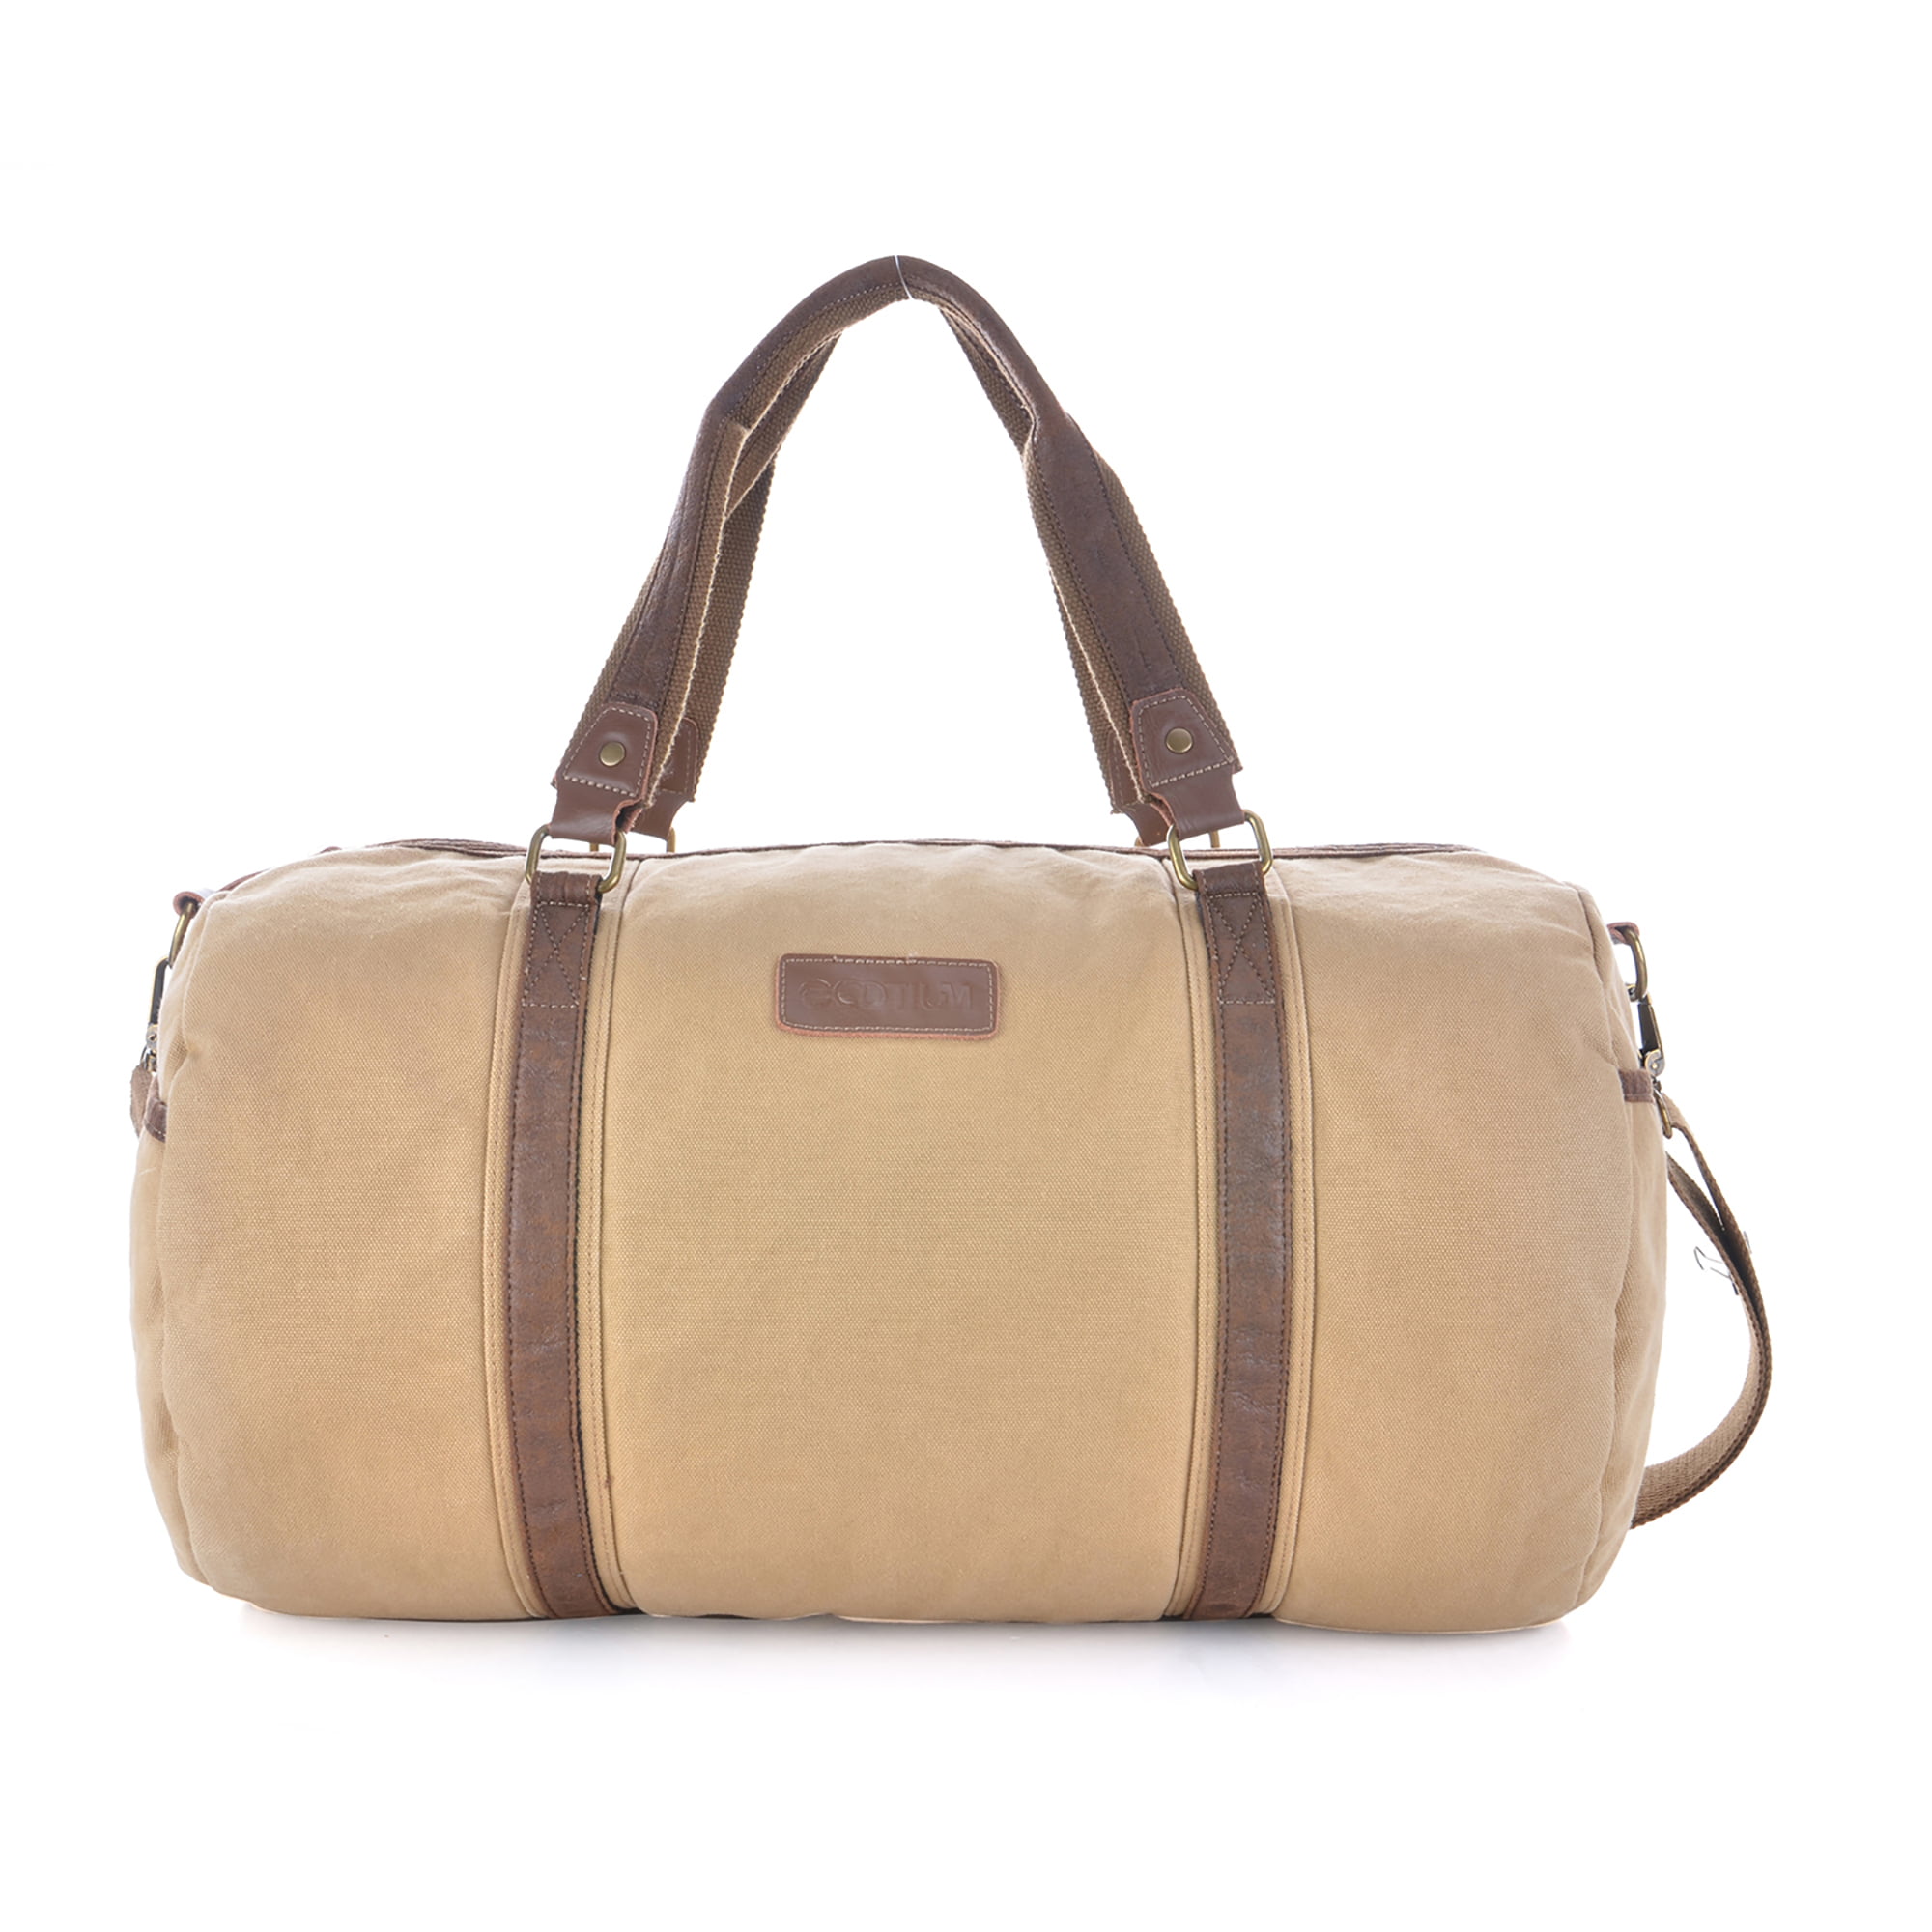 Gootium Vintage Canvas Duffel Bag Travel Tote Shoulder Gym Bag Weekend Bag, Khaki Large ...